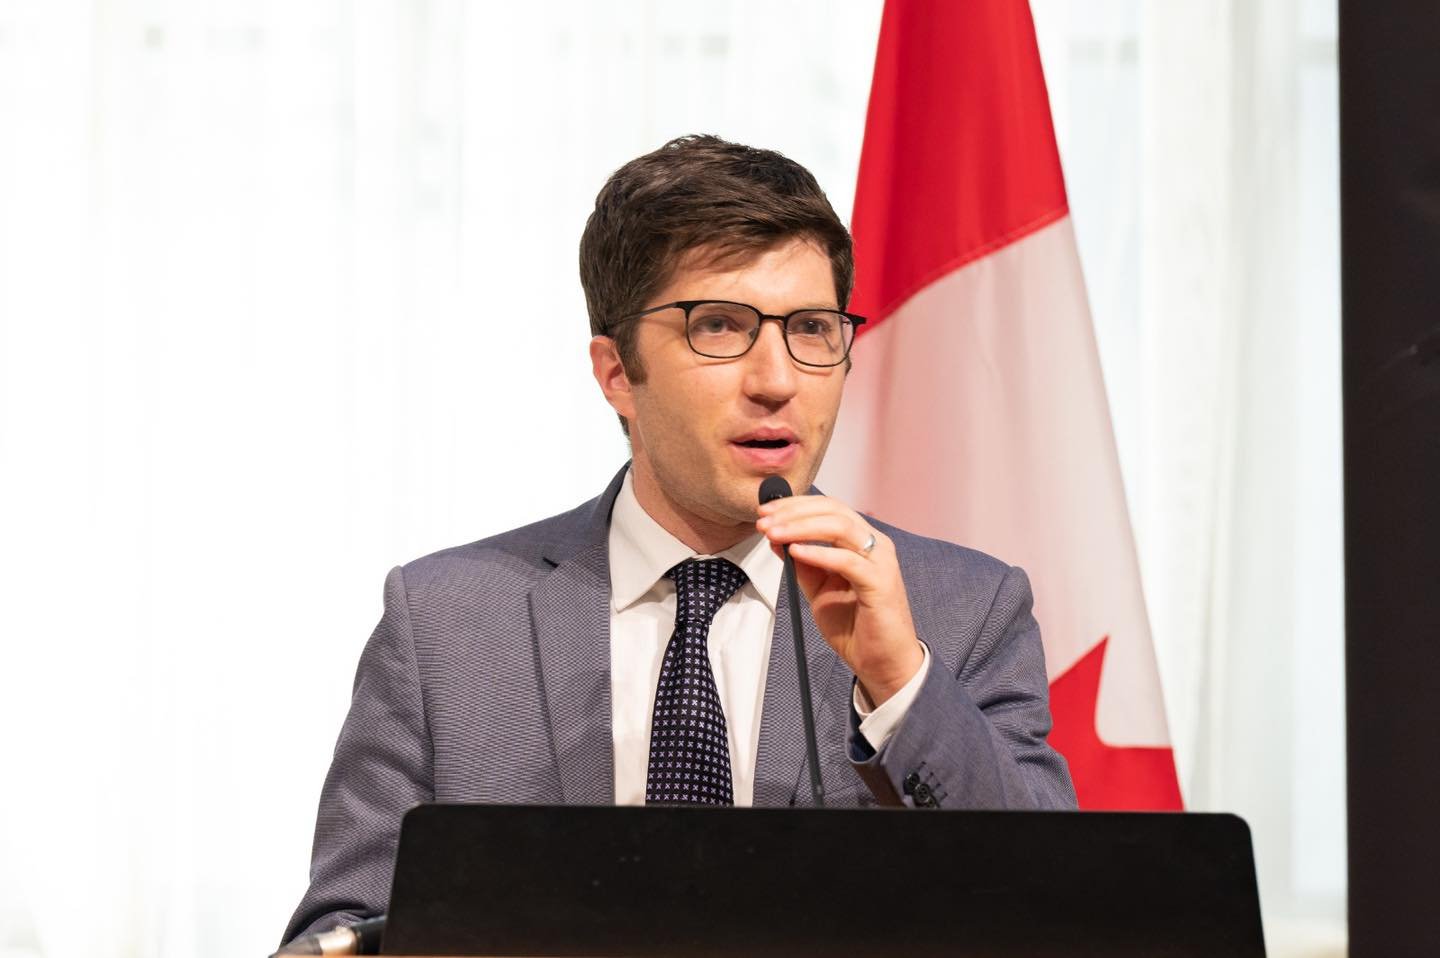 Canada launch_Garnett Genuis MP.jpg